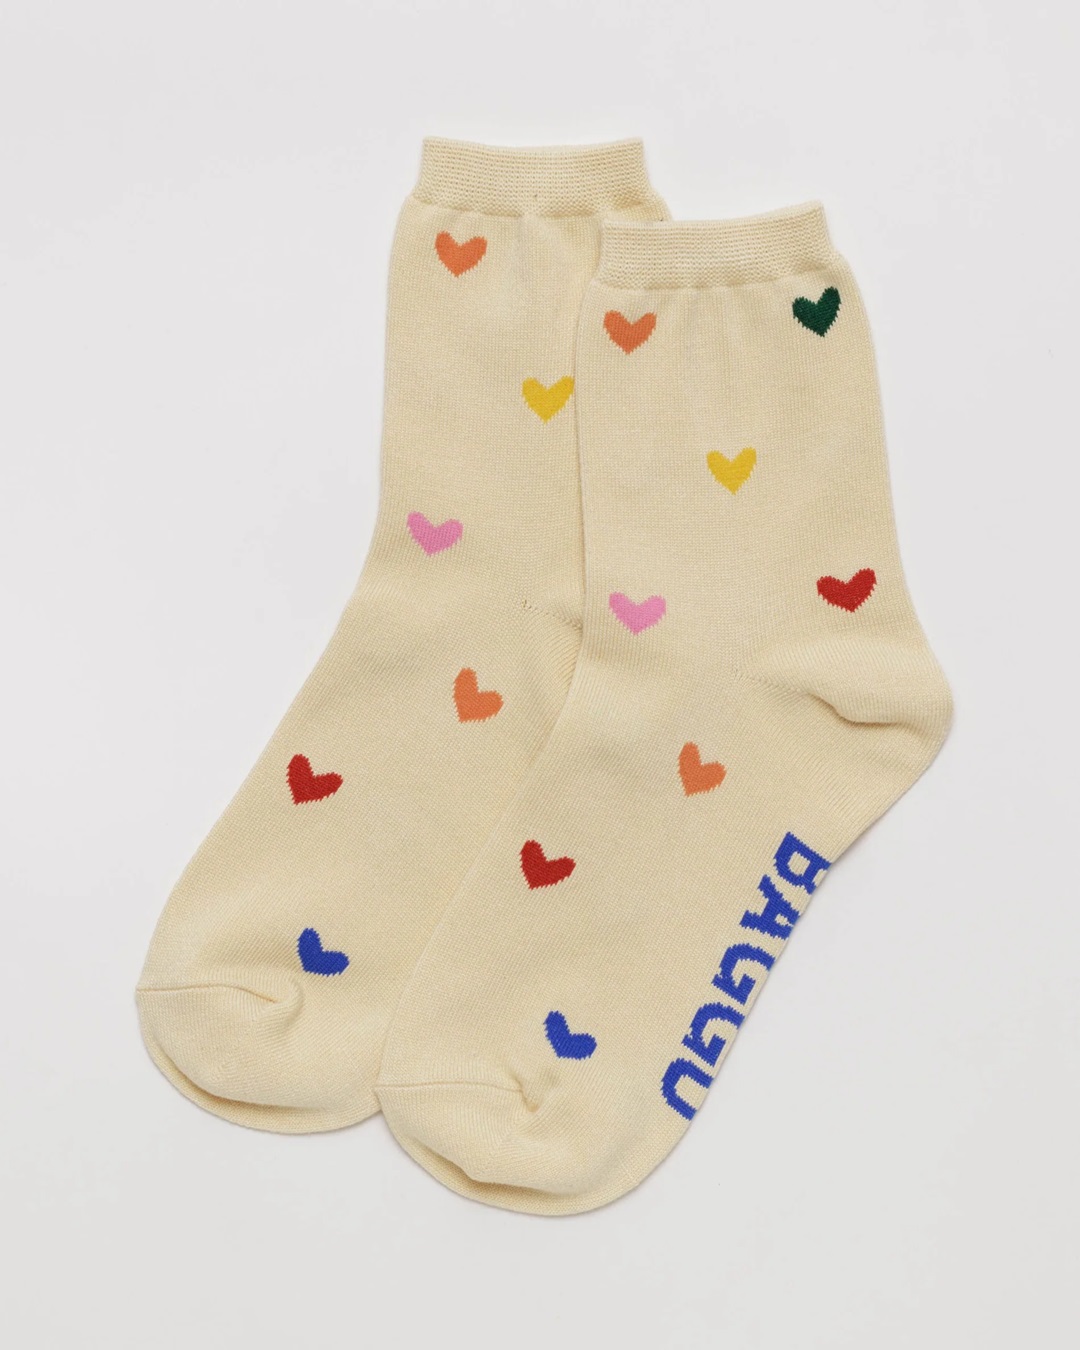 Cream socks with multi coloured hearts